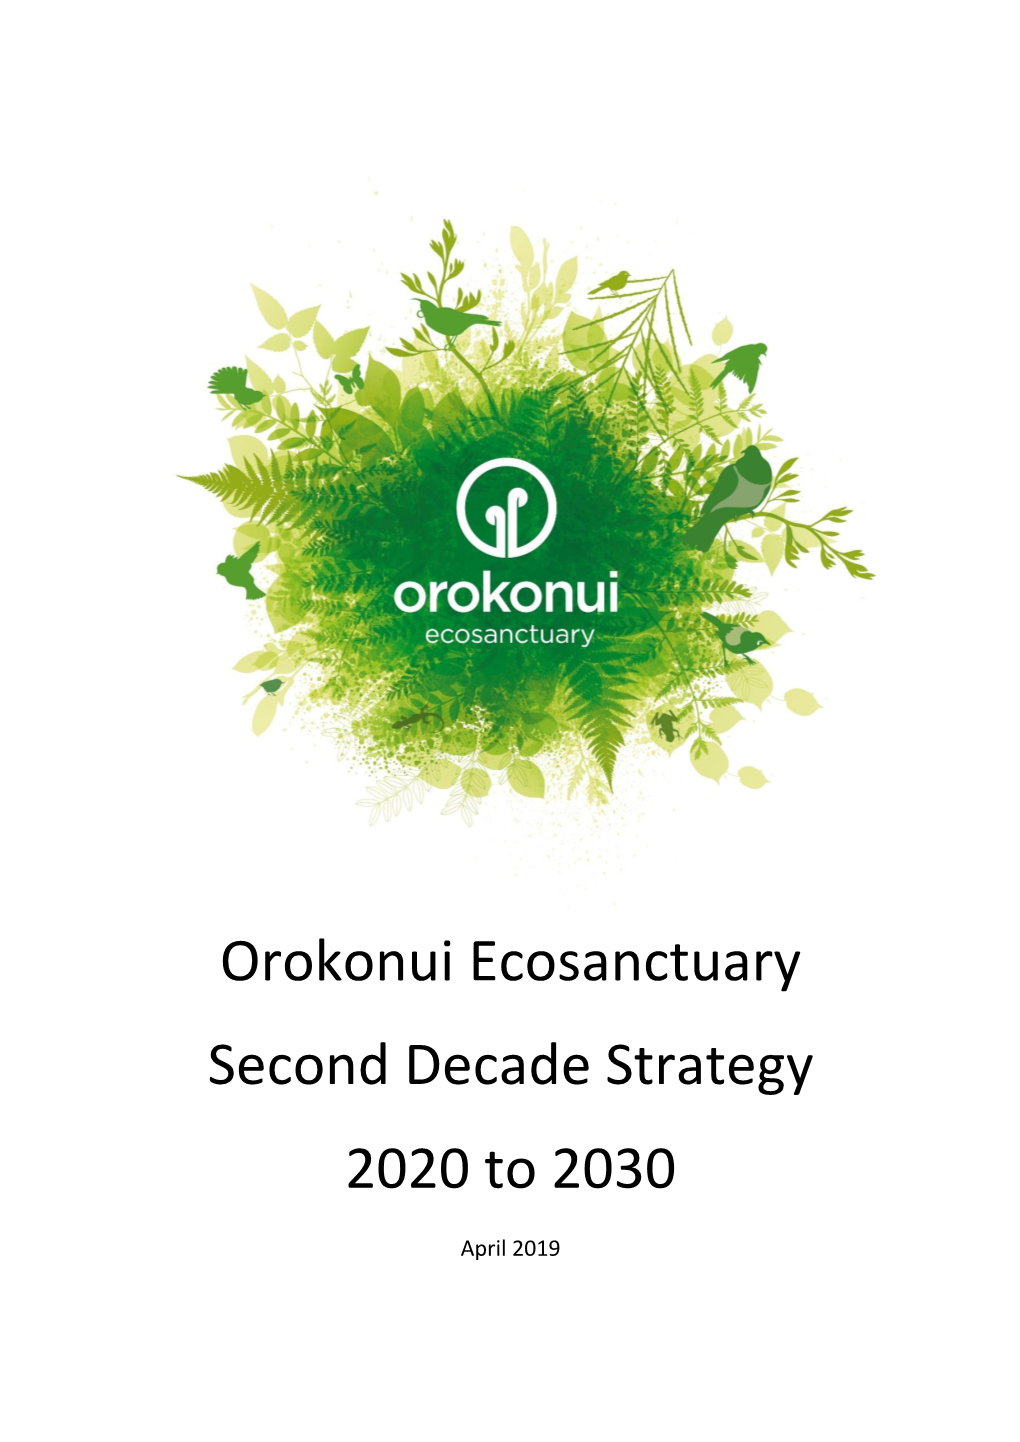 Orokonui Ecosanctuary Second Decade Strategy 2020 to 2030